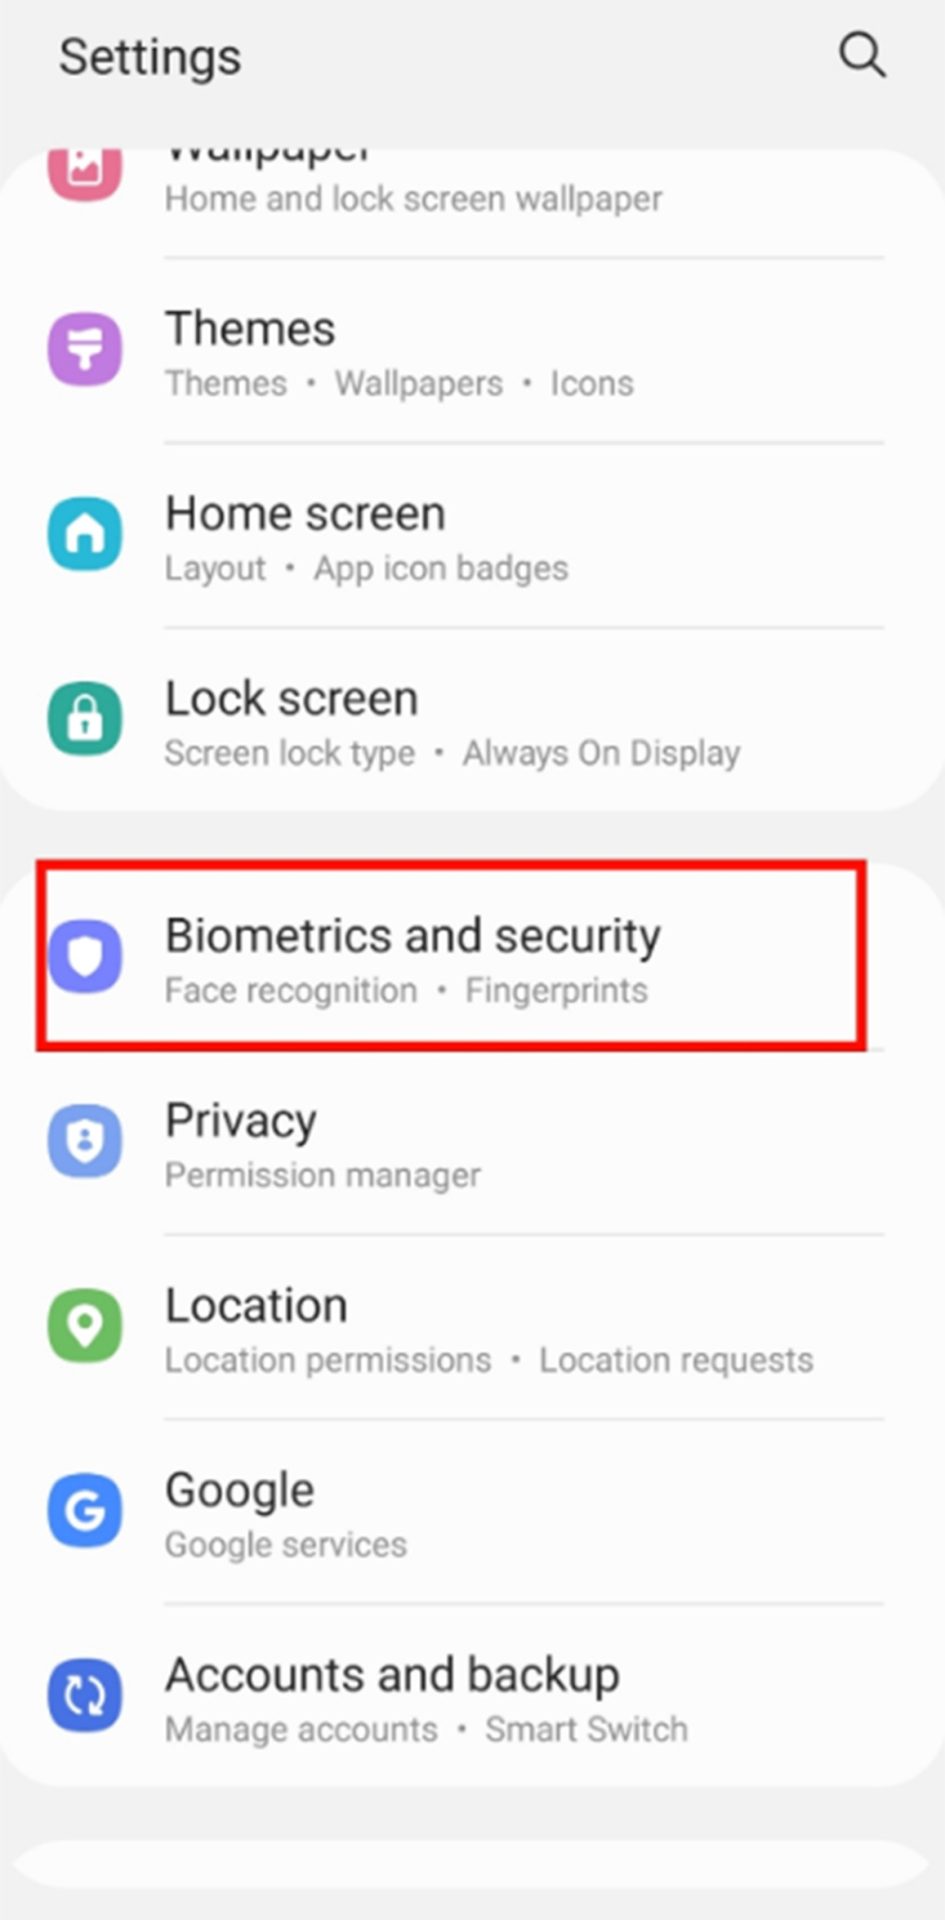 Settings menu/round biometric option is underlined